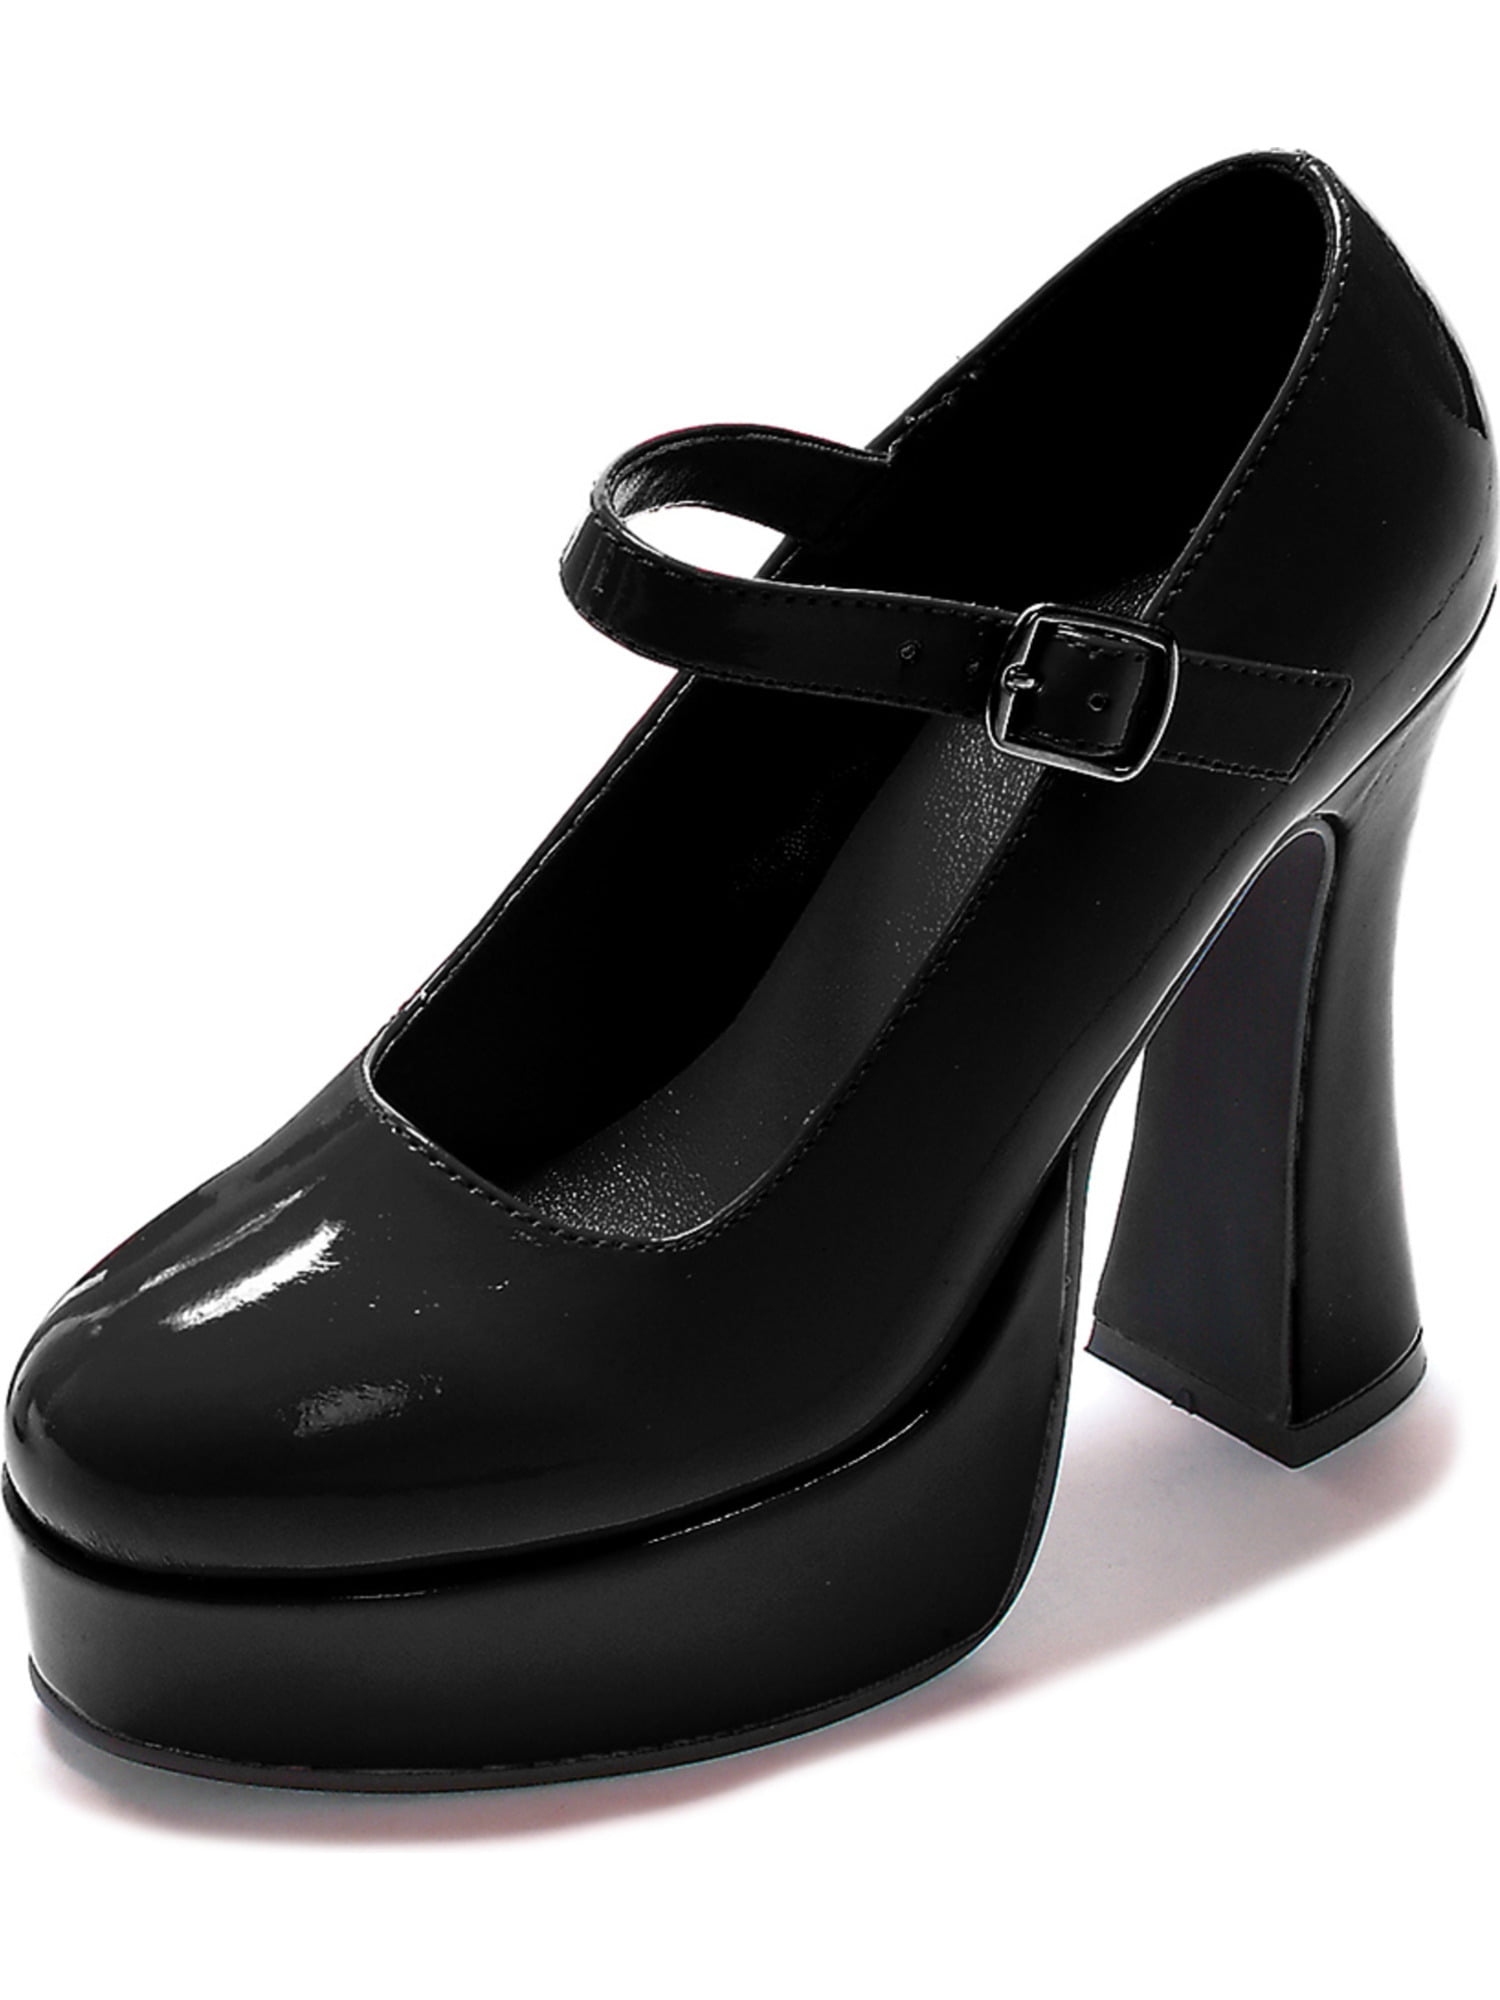 Summitfashions 5 Inch Women S Sexy Mary Jane Shoes Mid Platform Chunky Heel Shoe